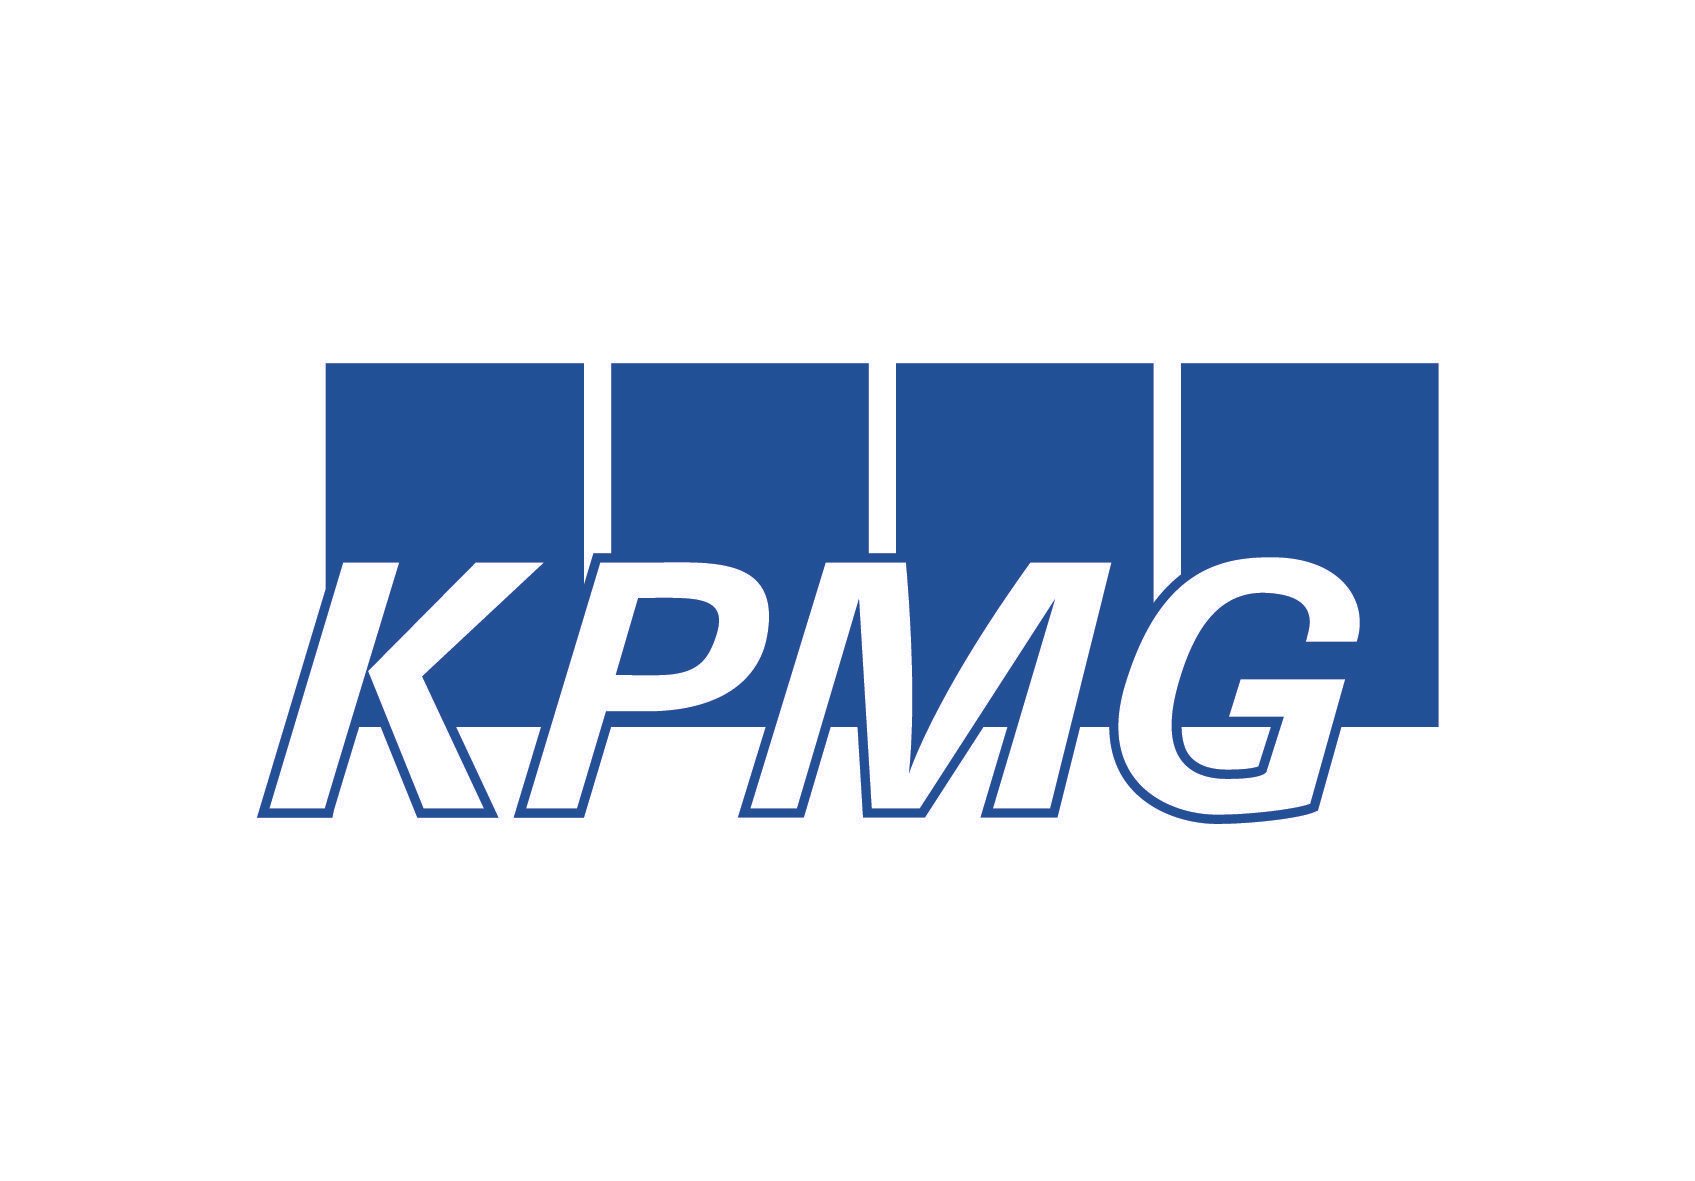 KPMG Logo - kpmg-logo - The Arc Minnesota